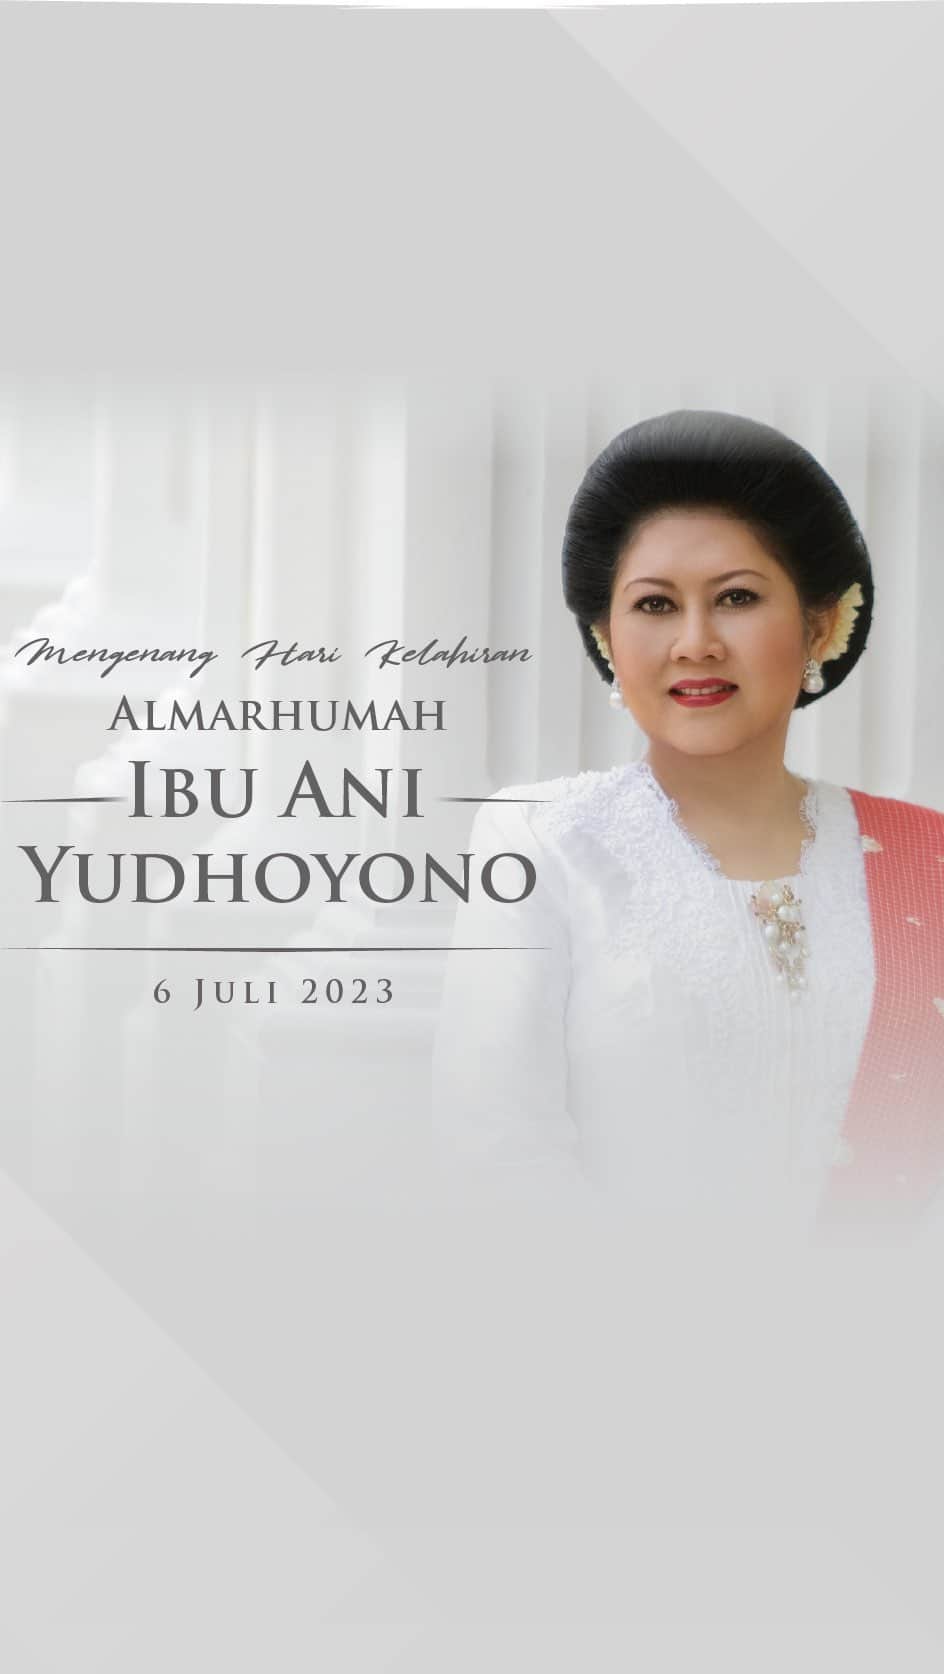 アニ・ユドヨノのインスタグラム：「Hari ini, 6 Juli 2023, adalah hari lahir ibu kami tercinta, Hj. Kristiani Herrawati atau yang akrab dipanggil Ani Yudhoyono. Ibu adalah sosok yang sabar, tangguh, penuh kasih sayang dan selalu menginspirasi keluarganya.   Tidak hanya itu, beliau pun mencurahkan hati dan pikirannya untuk masyarakat Indonesia. Selama 10 tahun, Ibu Ani setia mendampingi Presiden SBY dalam bertugas, serta berkiprah menjadi Ibu Negara yang penuh kasih sayang dan inspirasi bagi masyarakat Indonesia.   Semoga Almarhumah Ibu Ani tenang dan bahagia di sisi Allah SWT, dan semoga keteladanan, pemikiran dan legacy beliau dapat terus hidup.  Al Fatihah.」